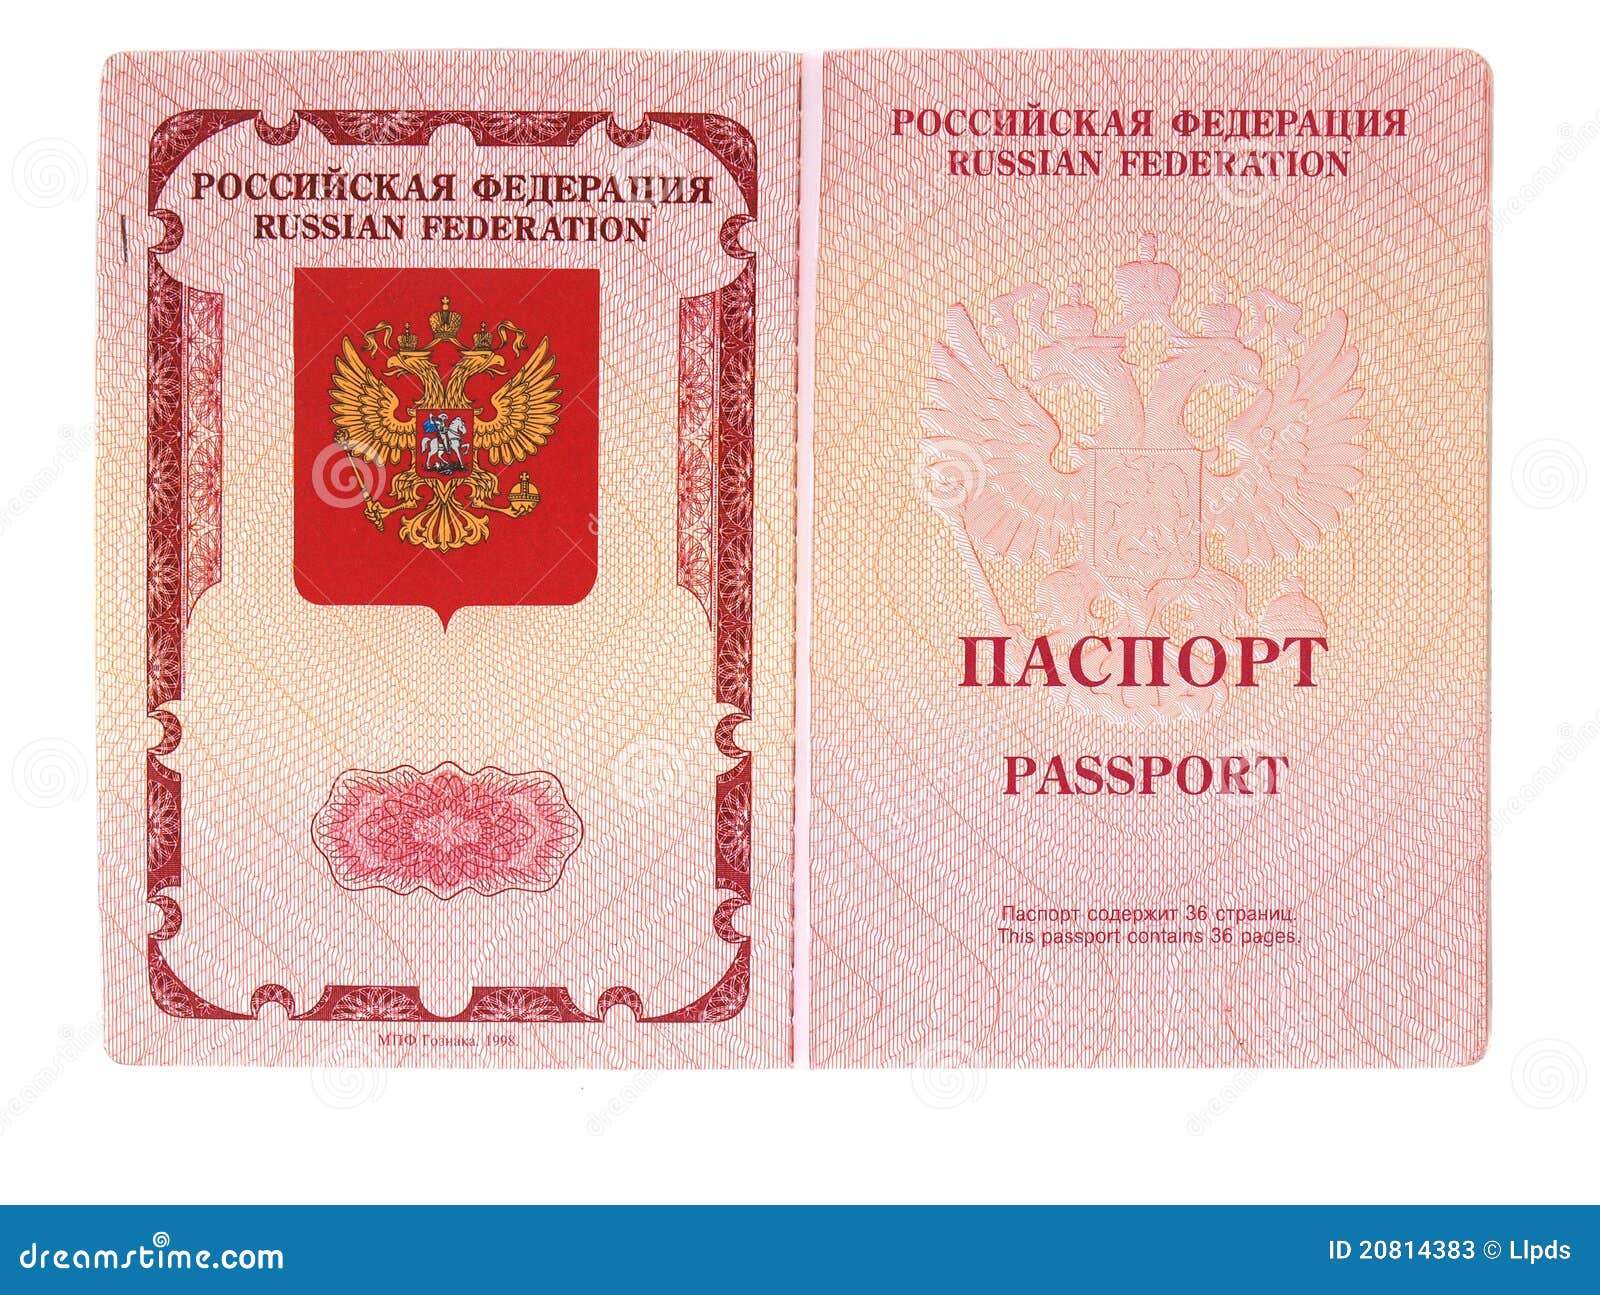 the russian passport 03